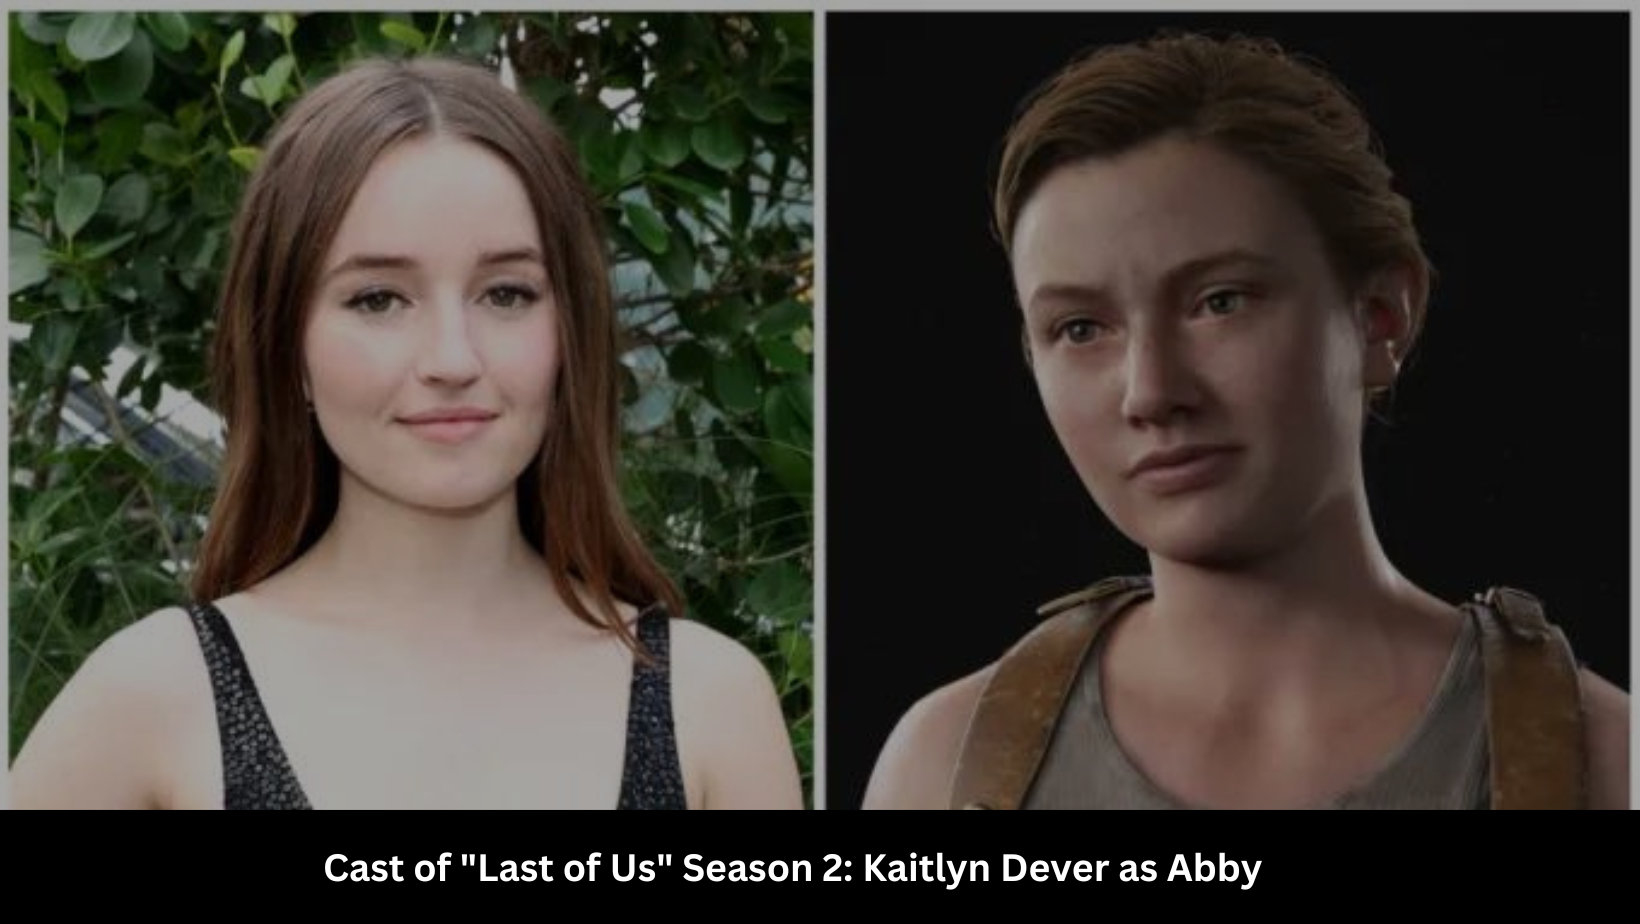 Cast of "Last of Us" Season 2: Kaitlyn Dever as Abby